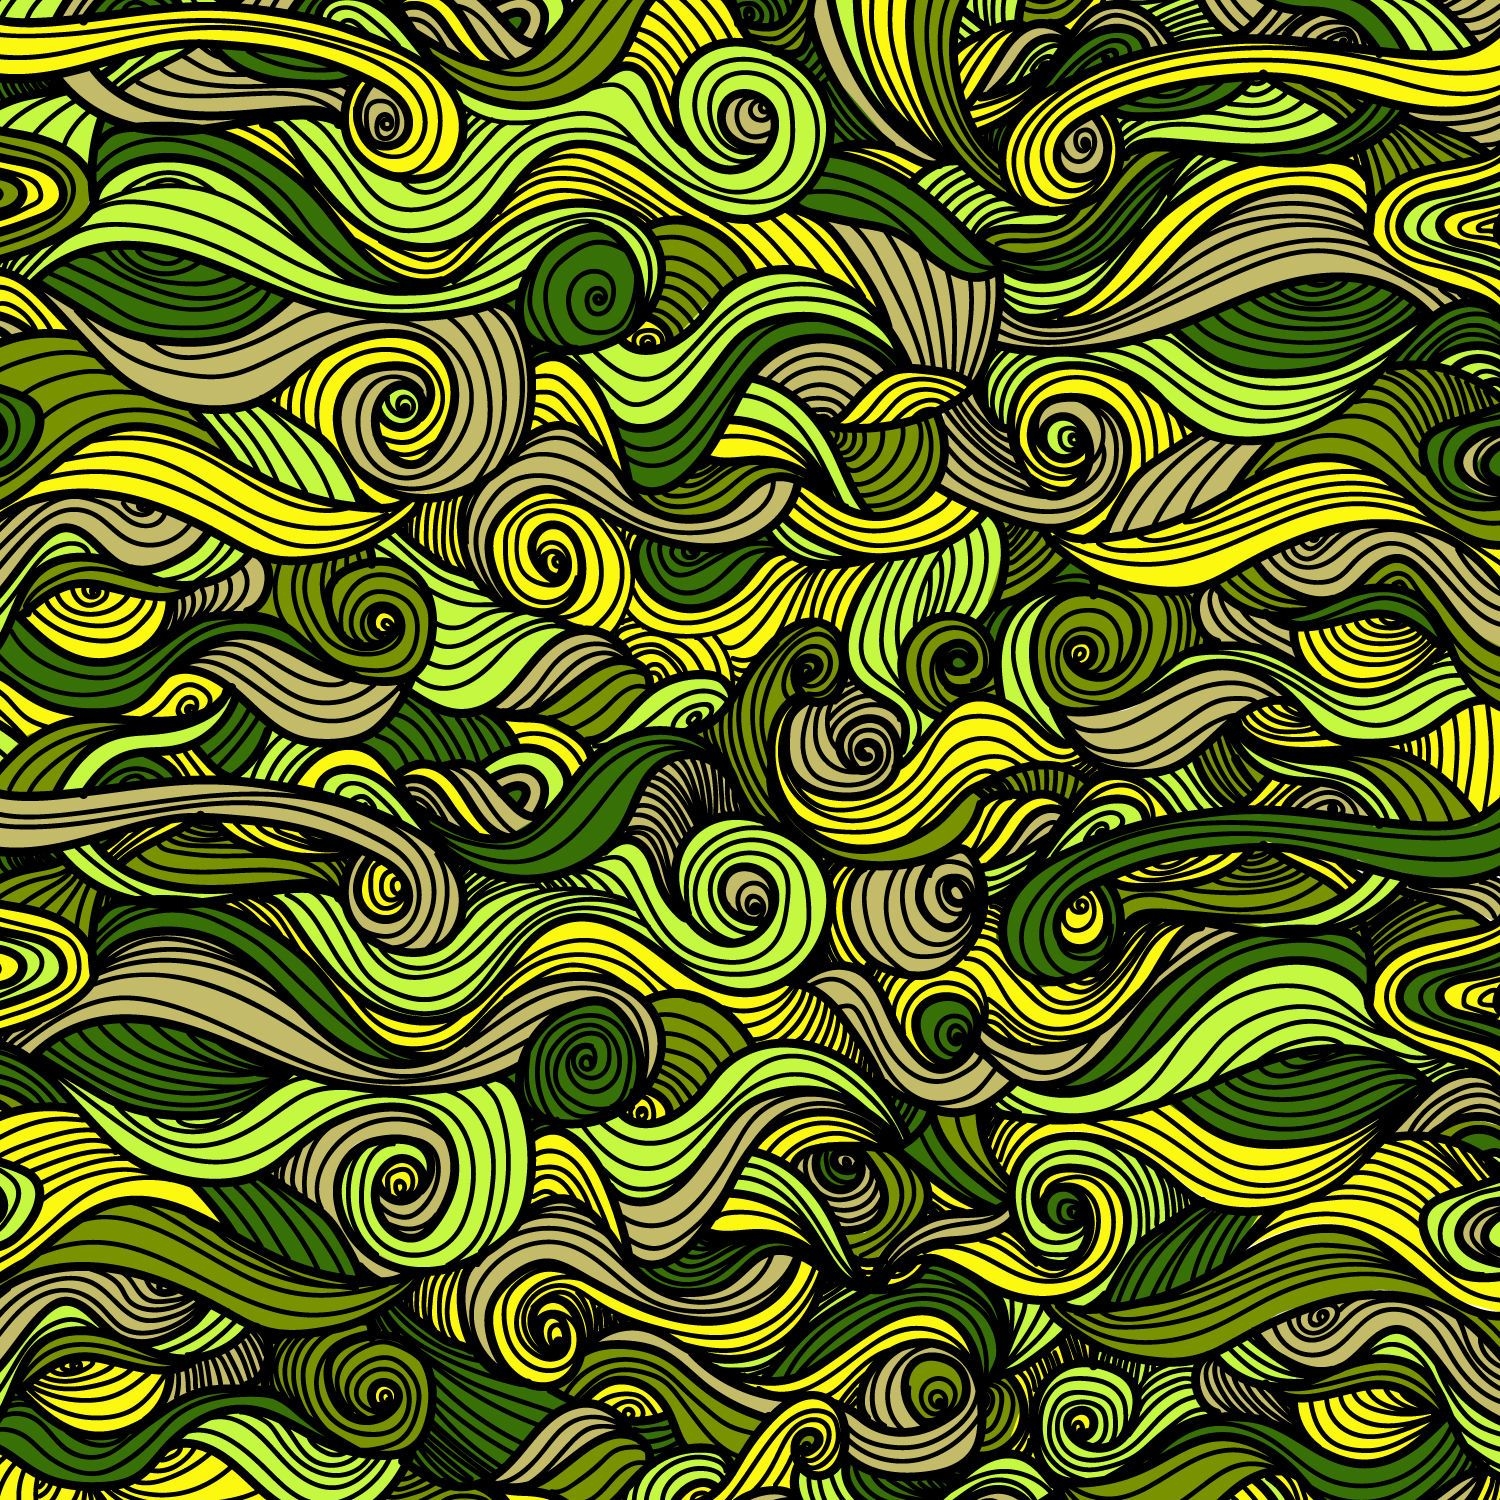 Green curly swirls background